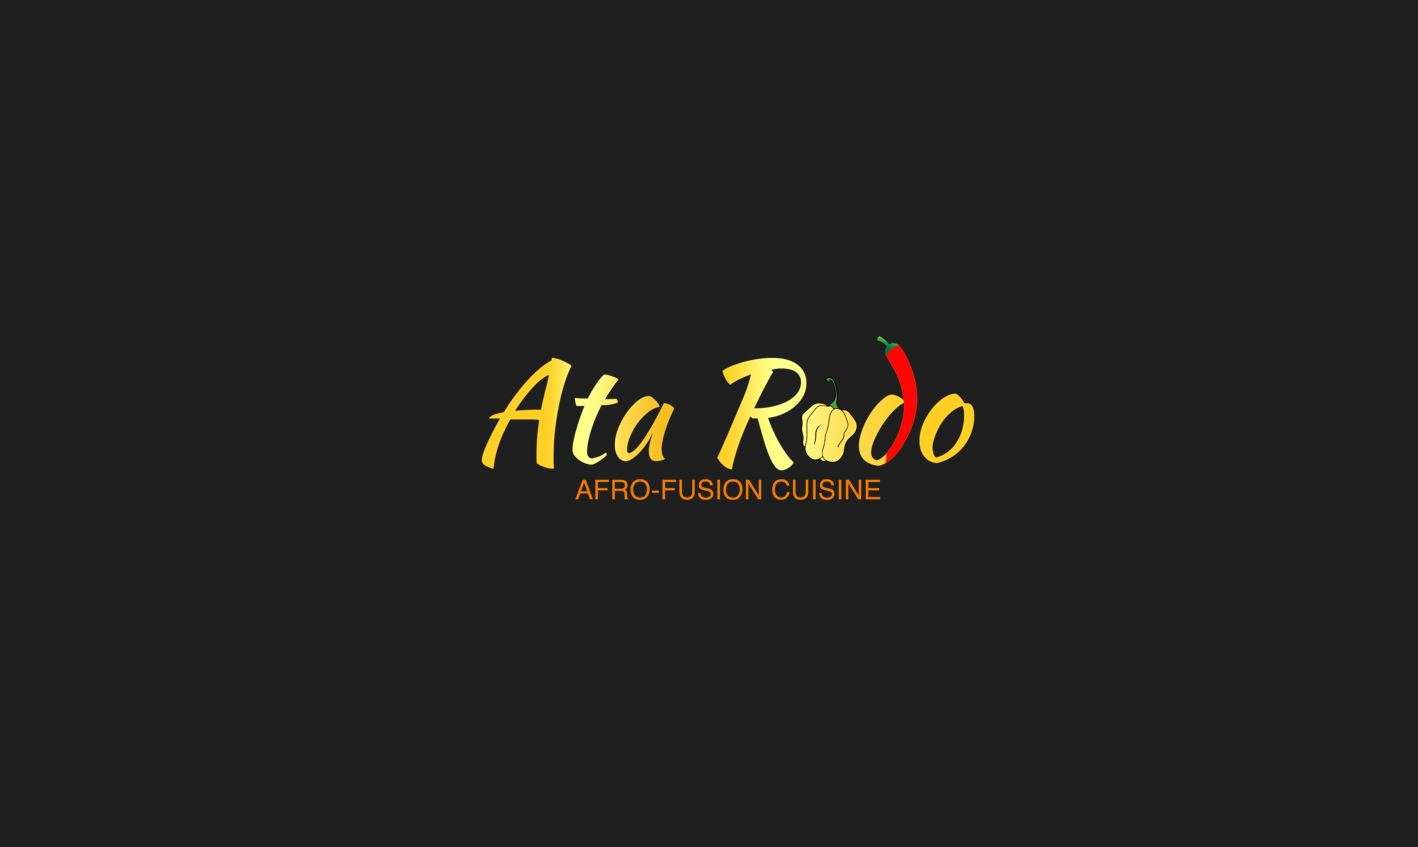 ATA RODO - African Restaurant